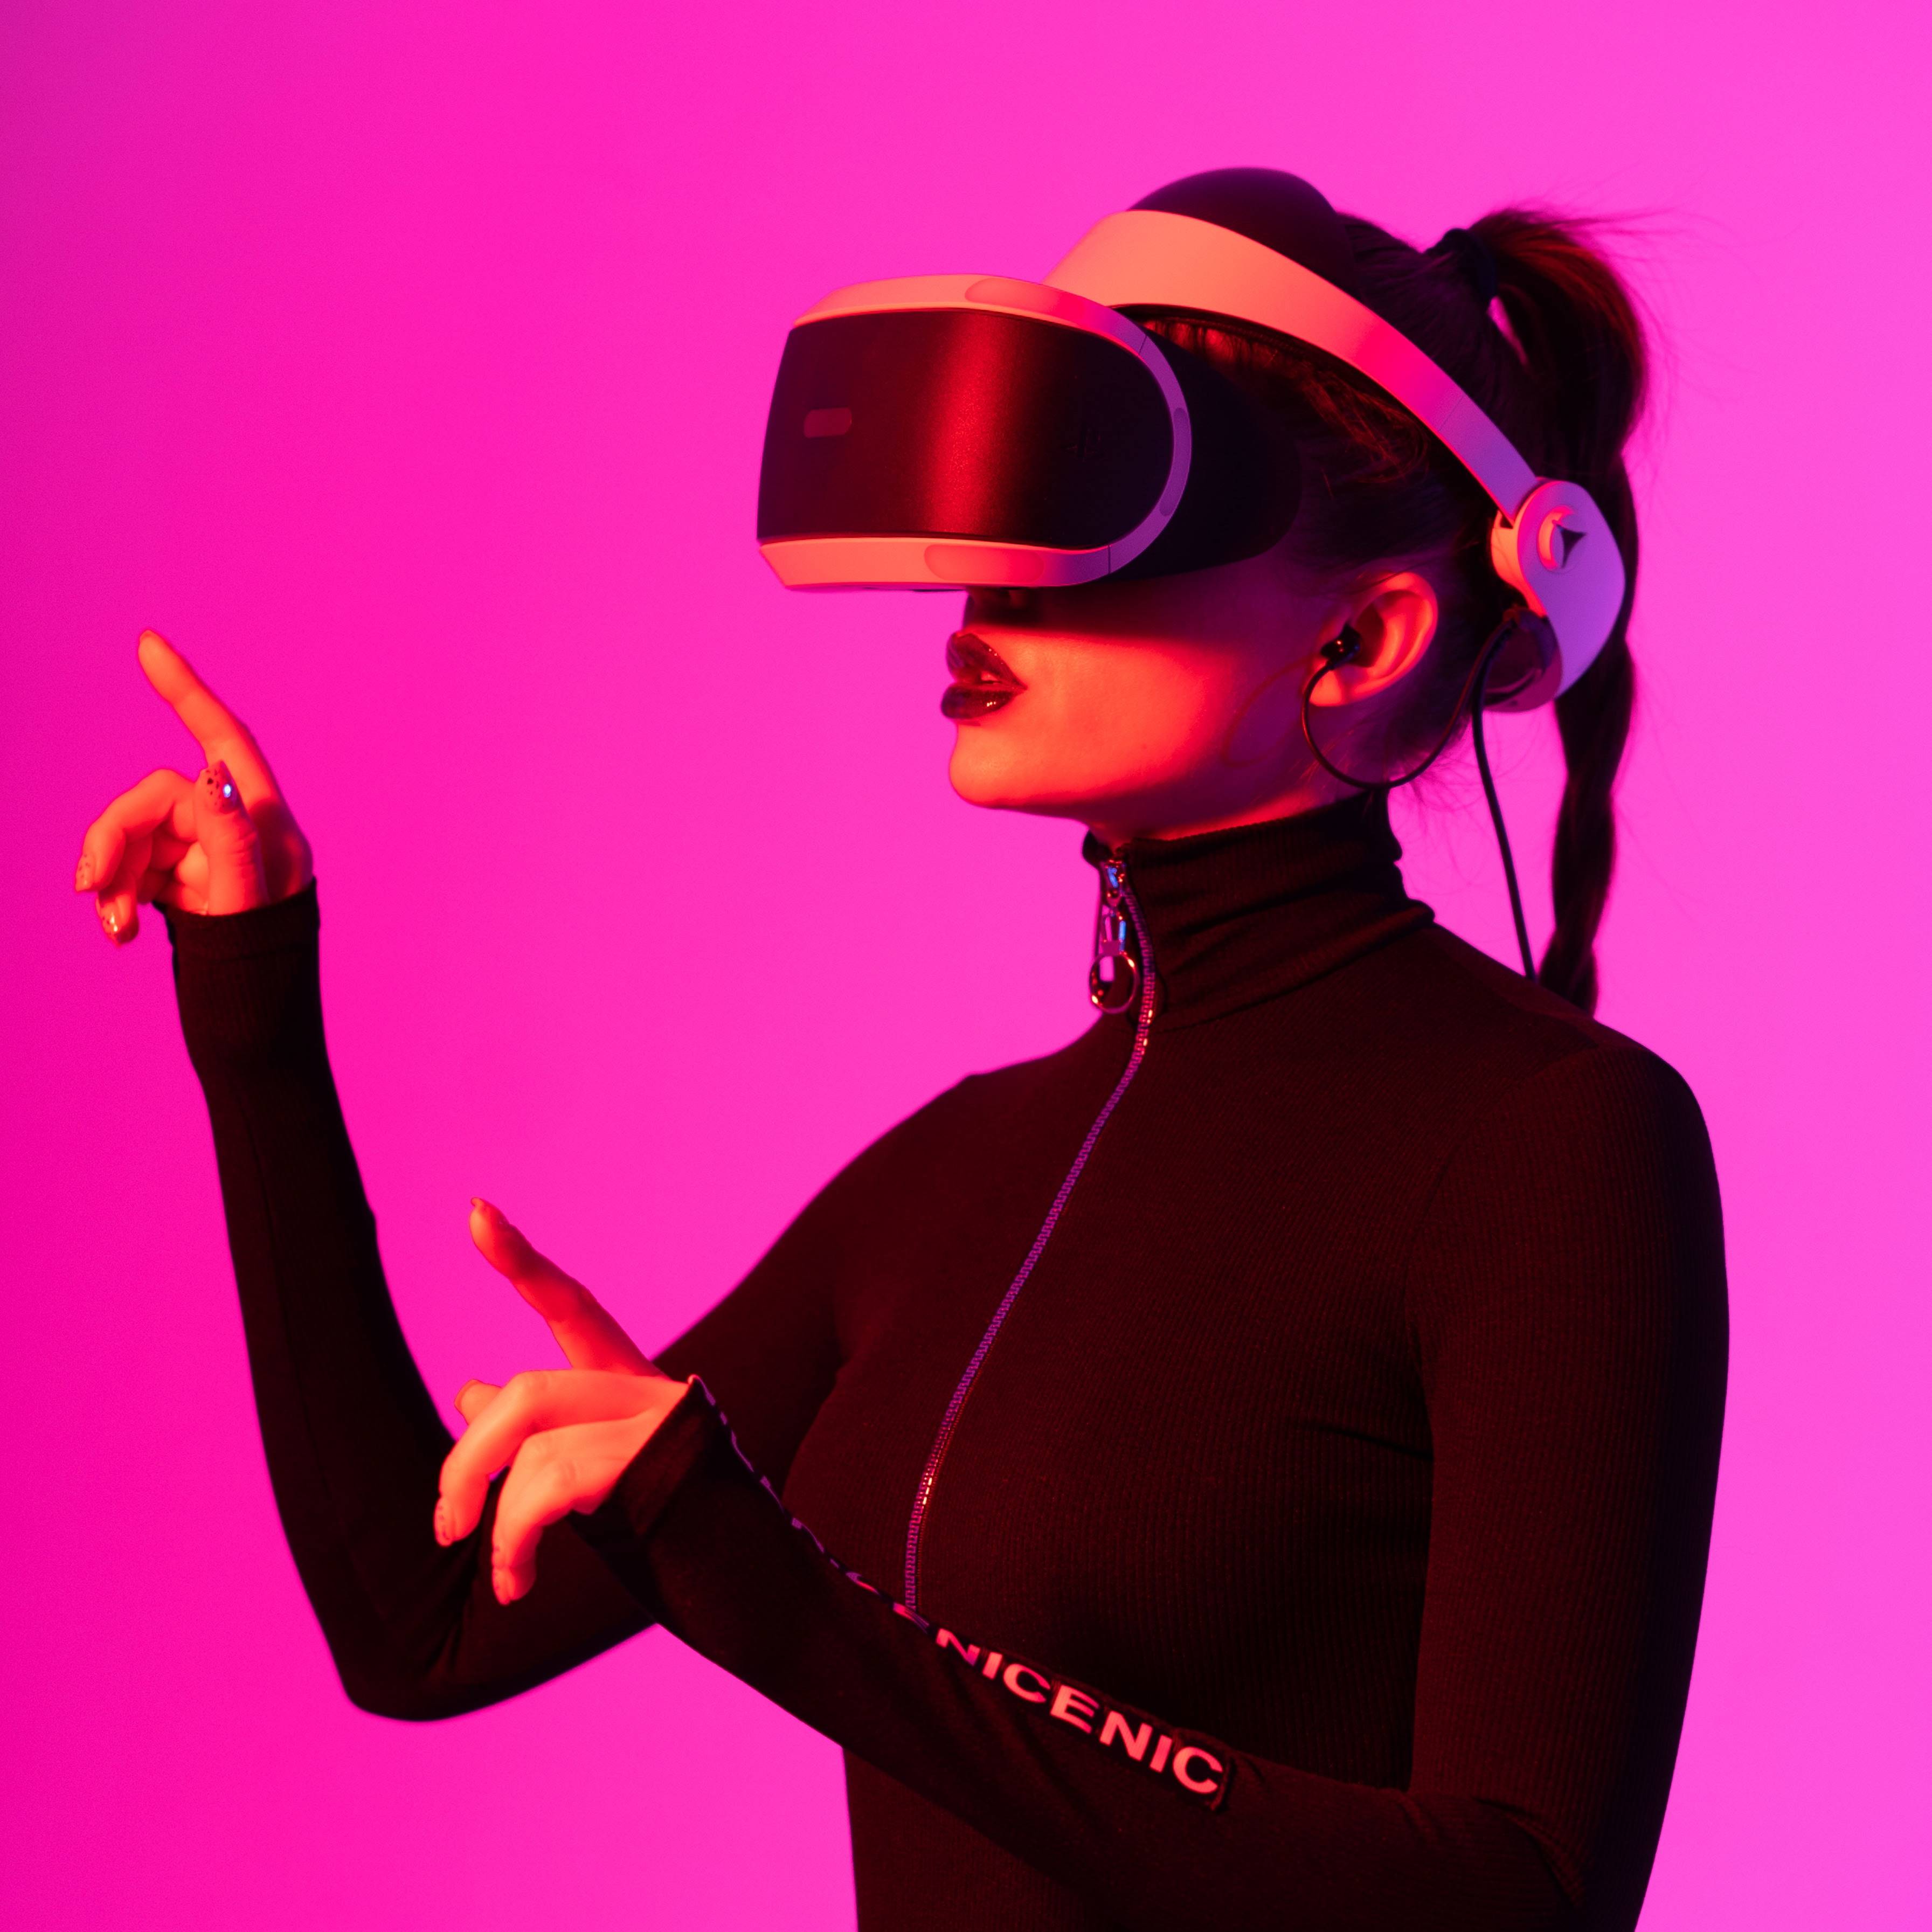 Experiență VR Cadou - Inchiriere ochelari VR  | 2 zile, 2 echipamente, smartexperience.ro